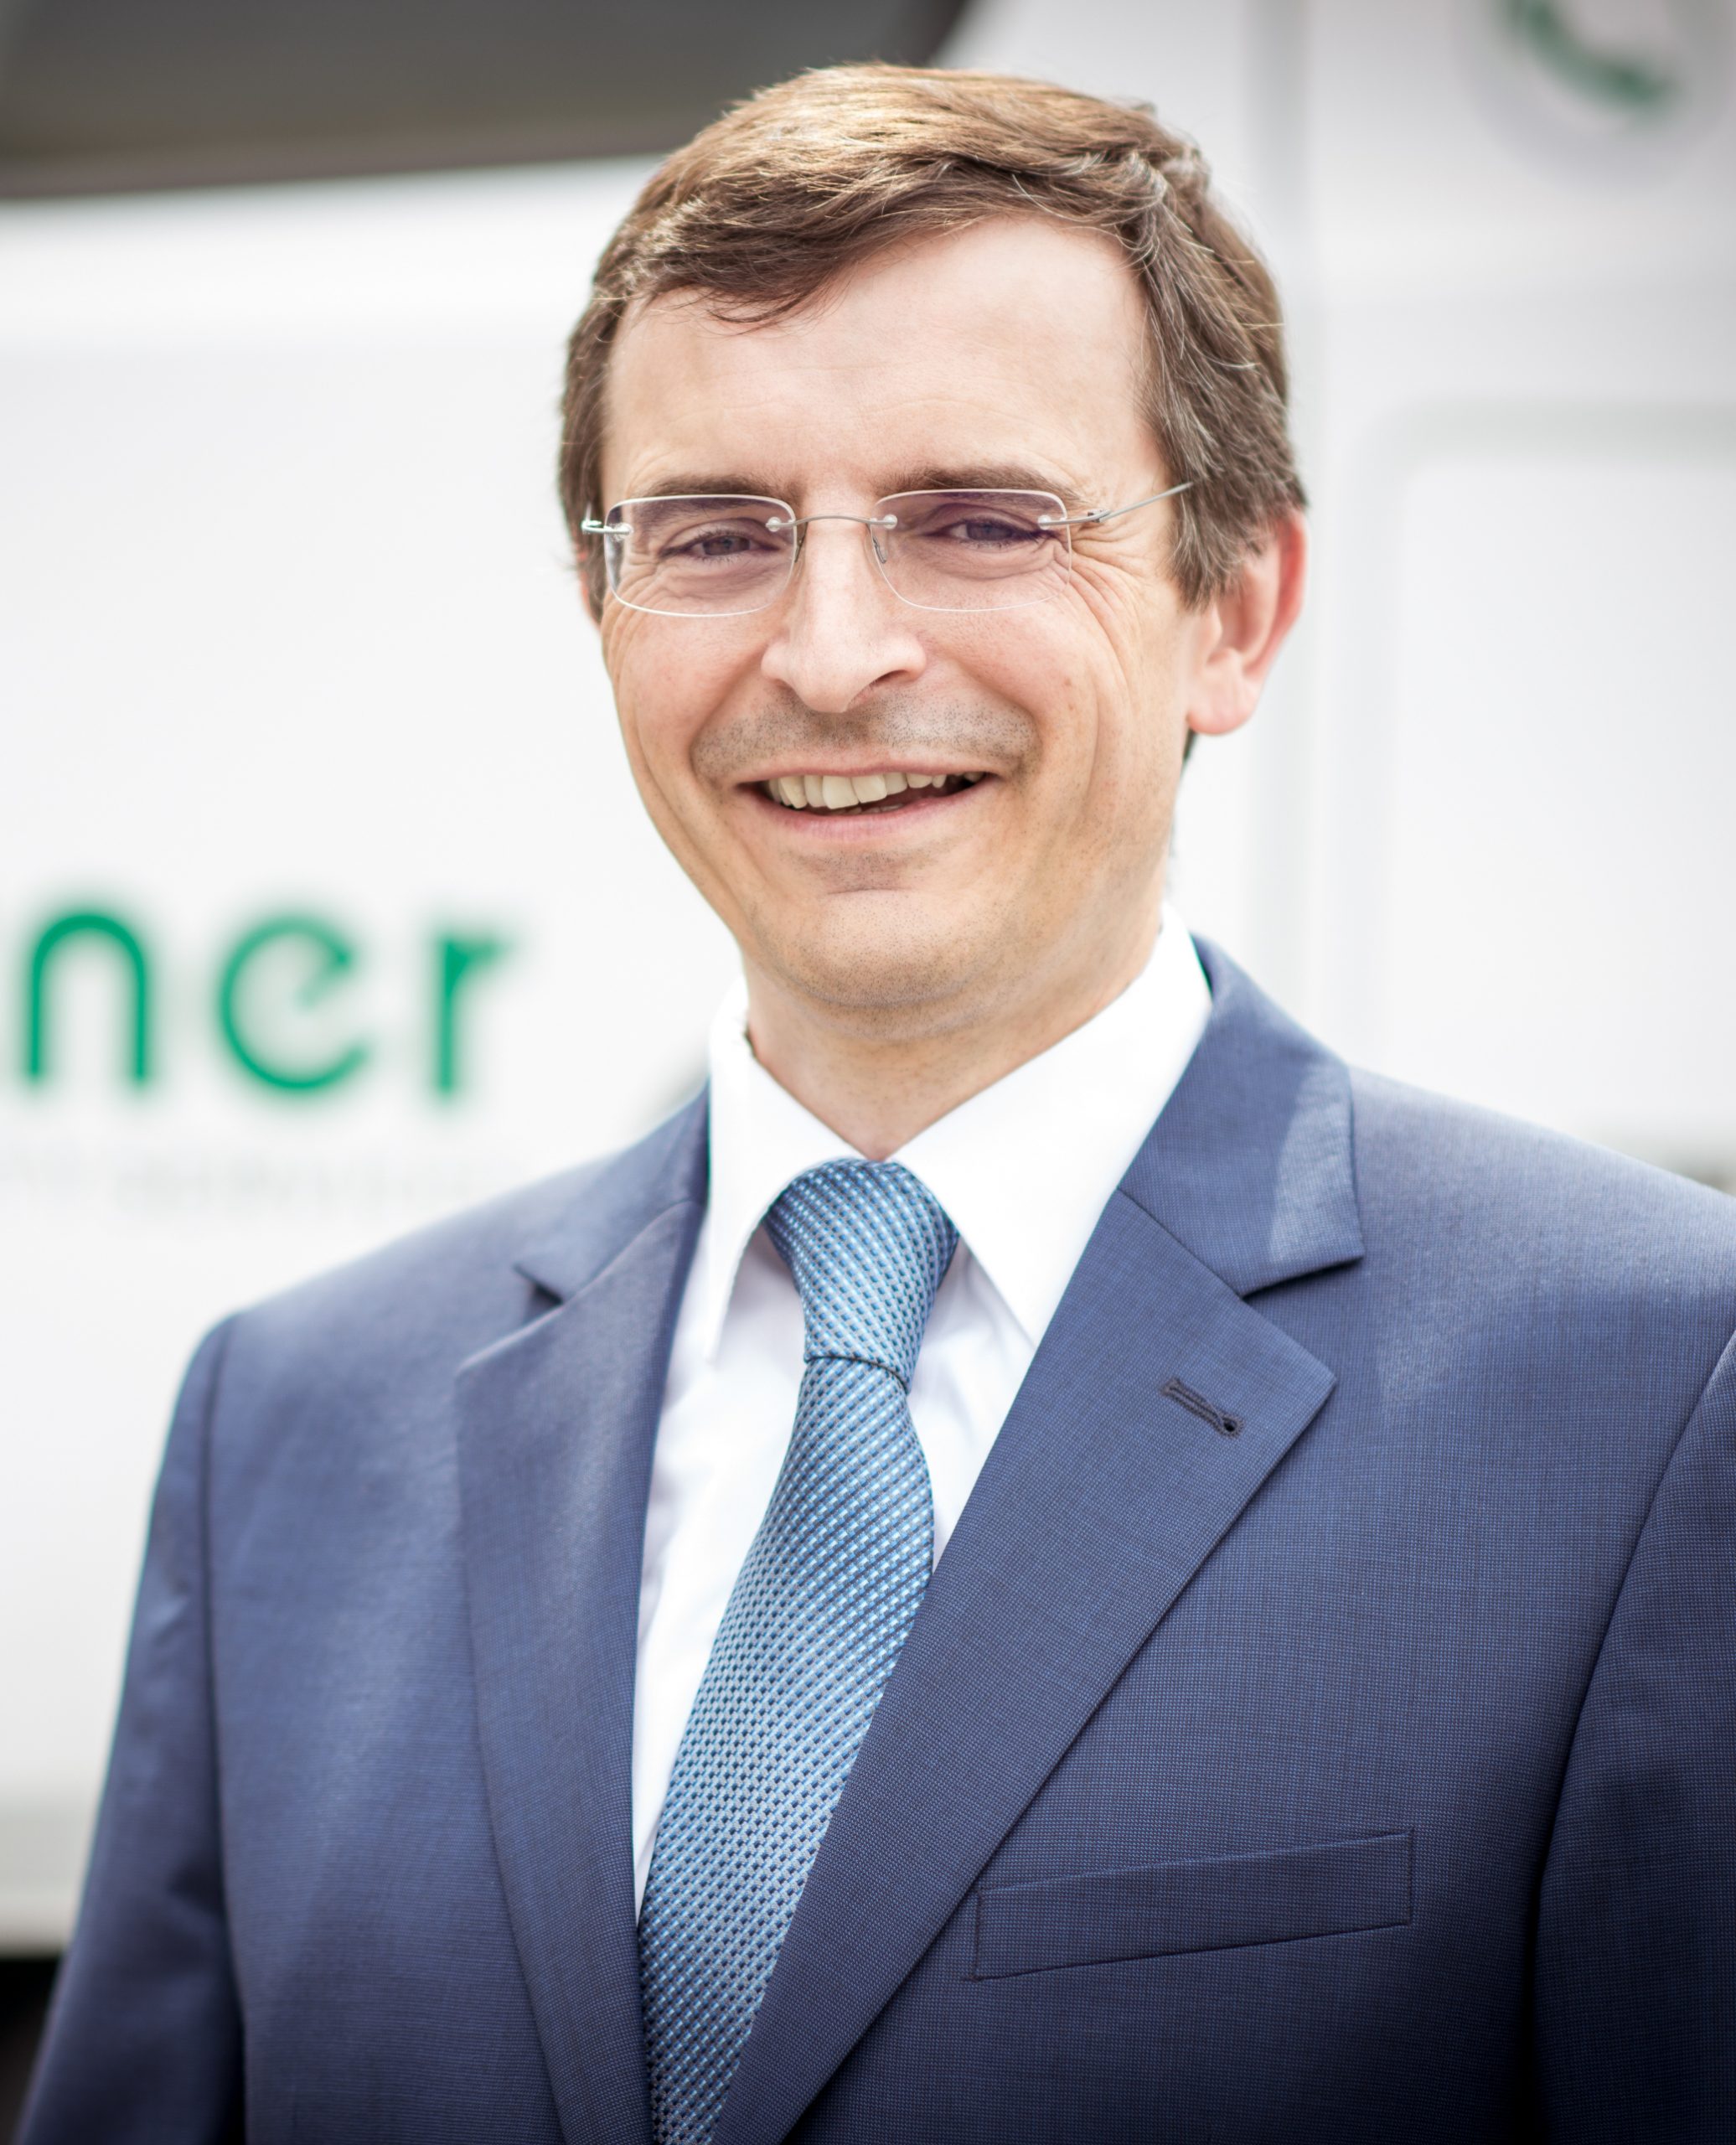 Brantner green solutions - Josef Scheidl - Geschäftsführung